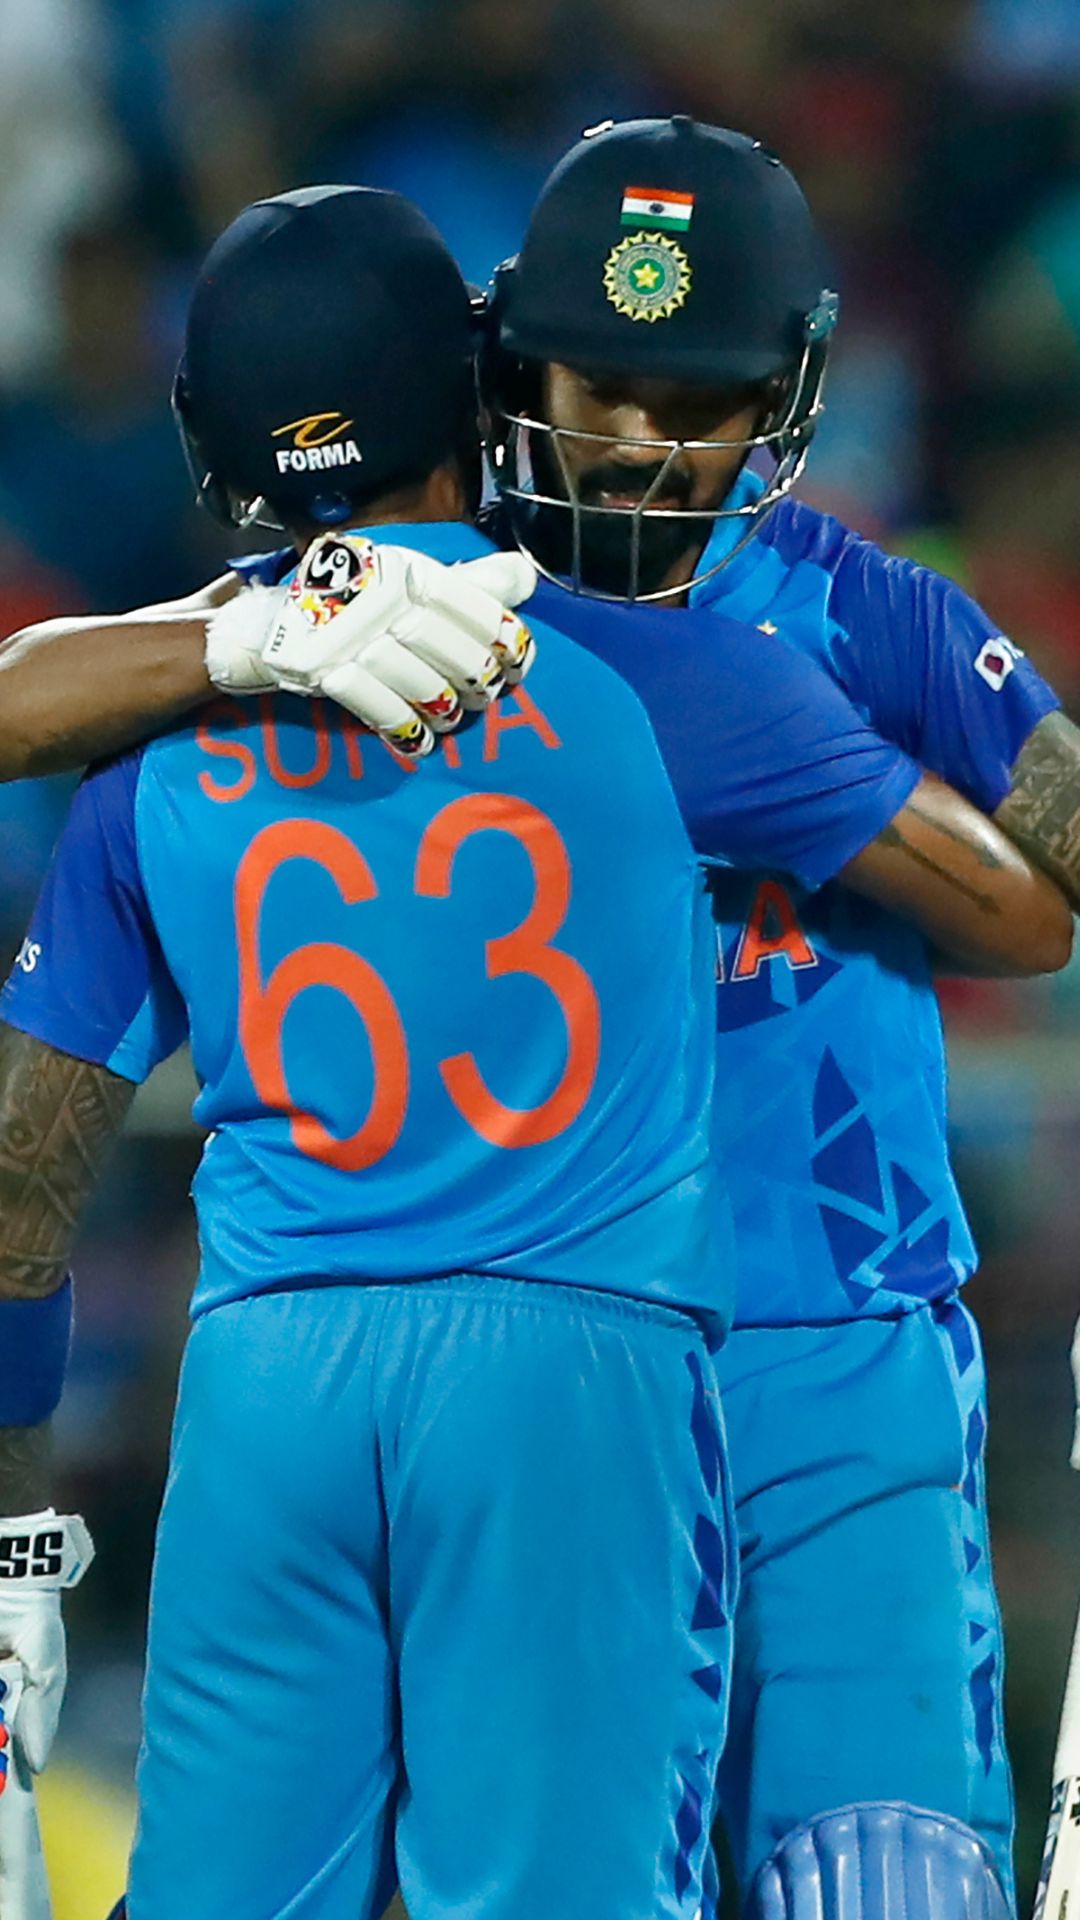 KL Rahul captain, Suryakumar Yadav at No. 6: India's predicted playing XI for 1st ODI vs Australia